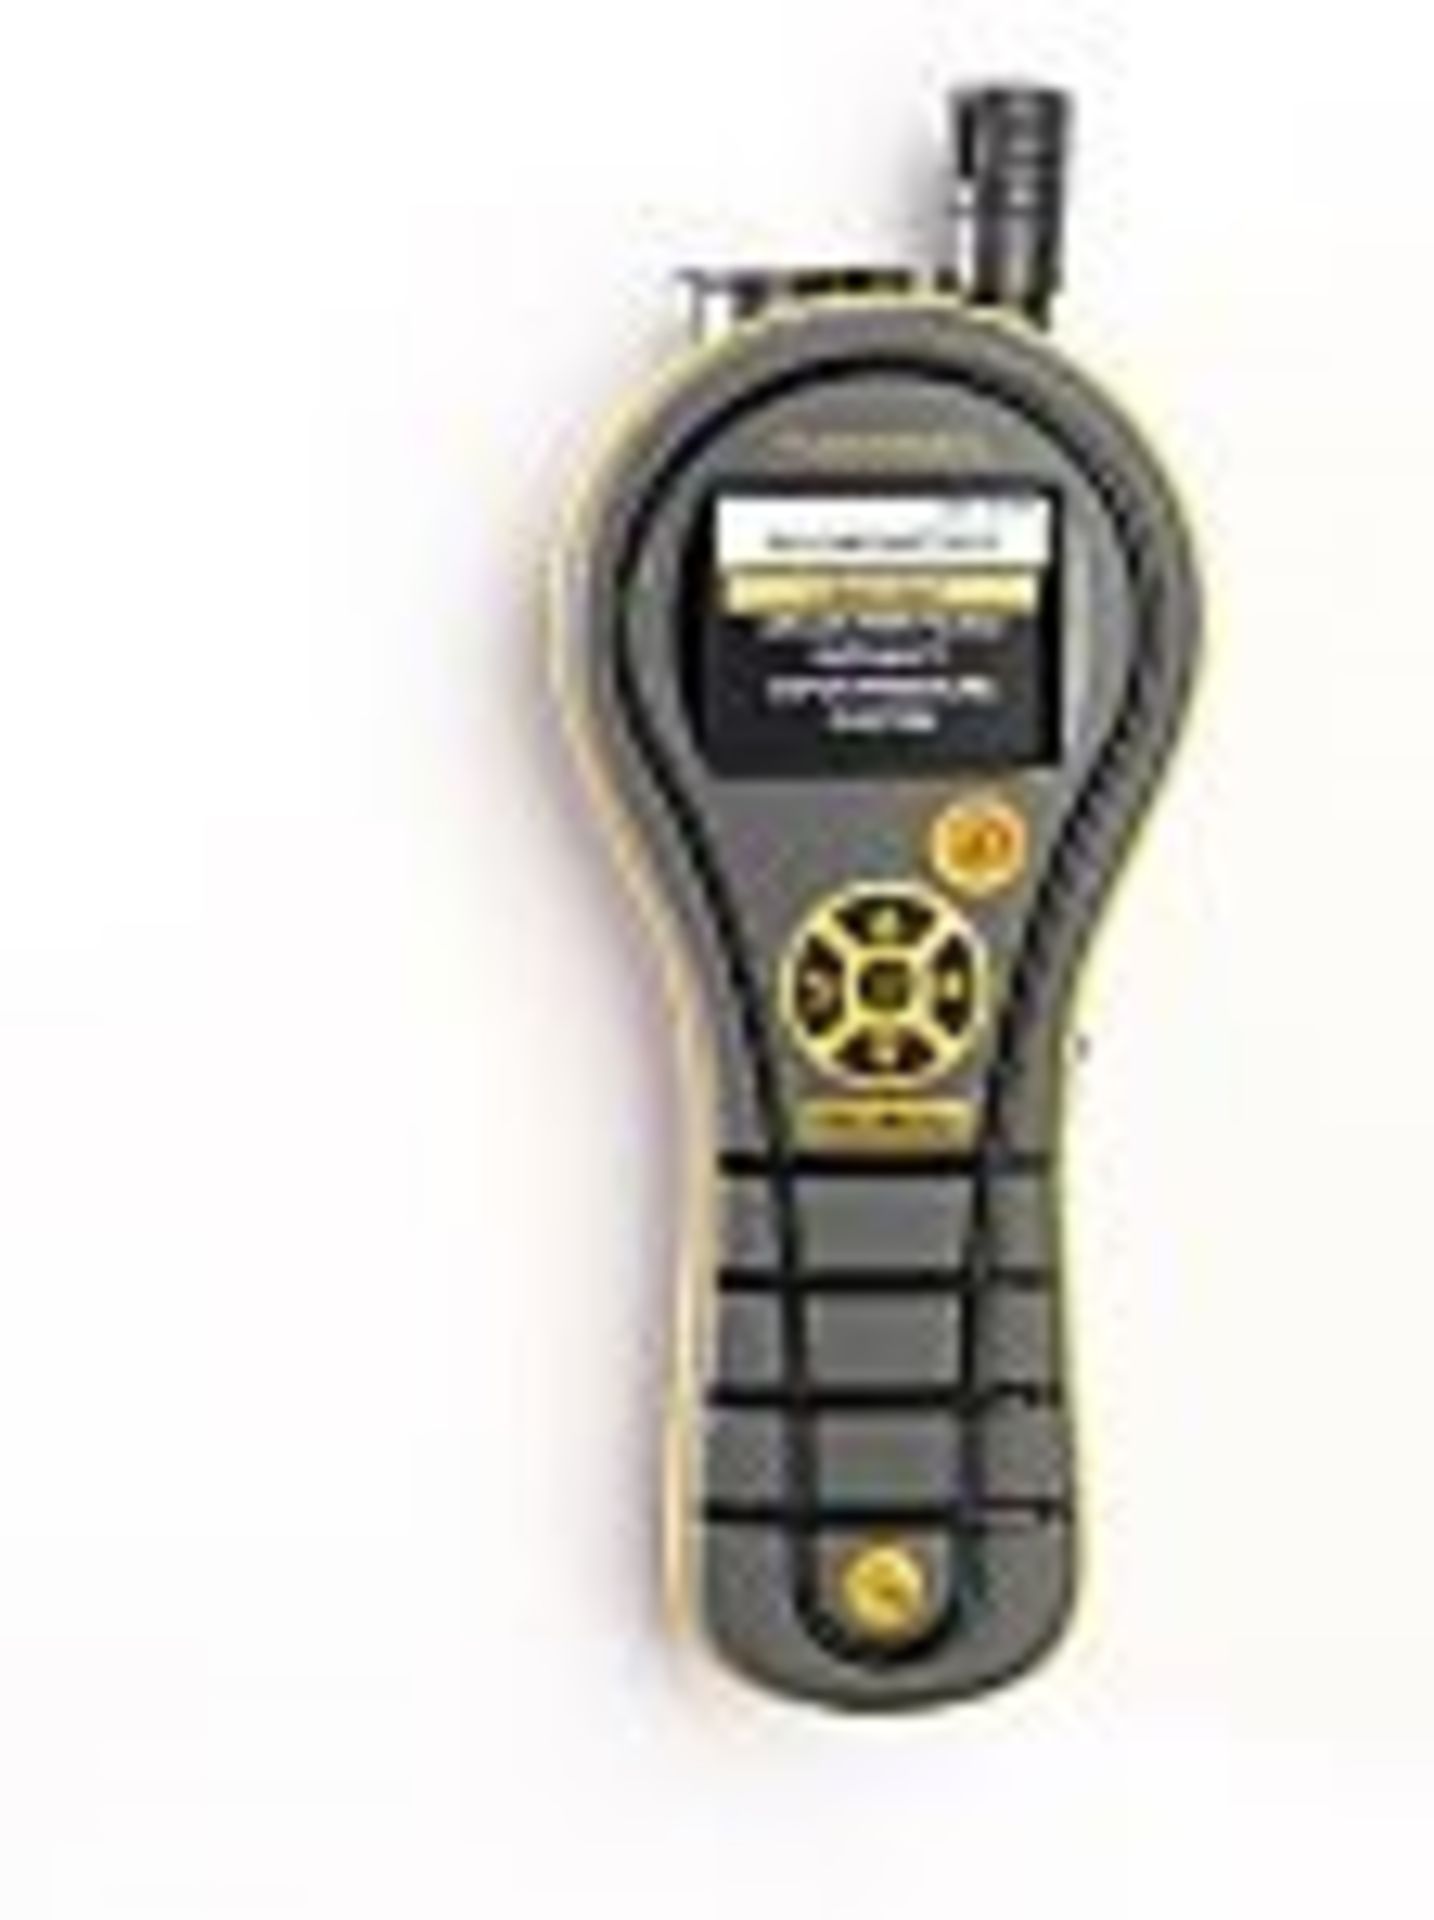 Protimeter BLD7750 Handheld Hygrometer 2, Max Humidity 98%RH - Image 3 of 3